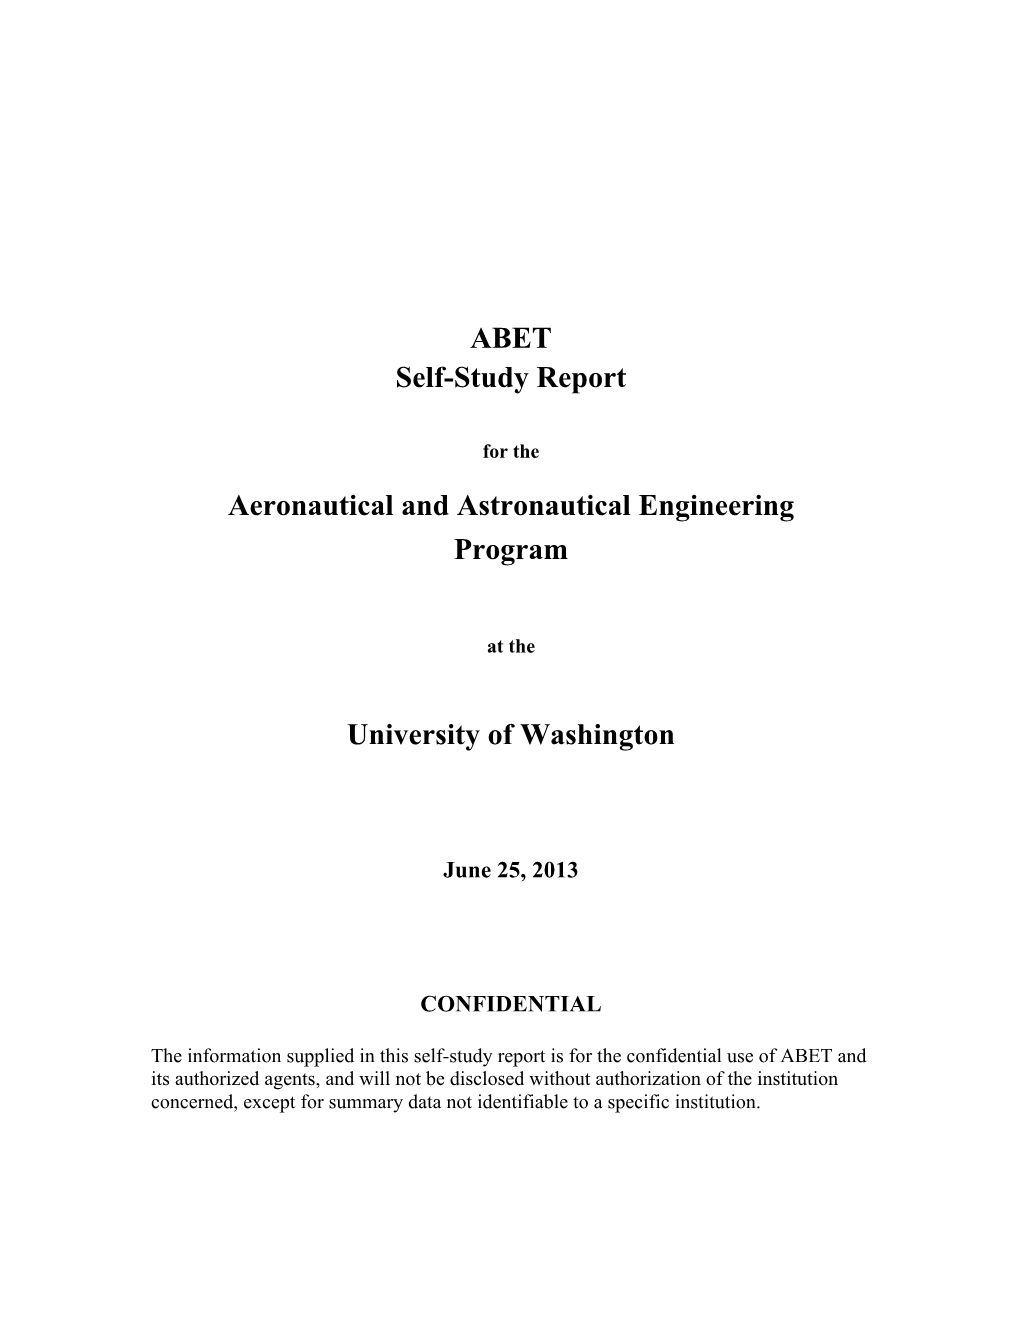 ABET Self-Study Report Aeronautical and Astronautical Engineering